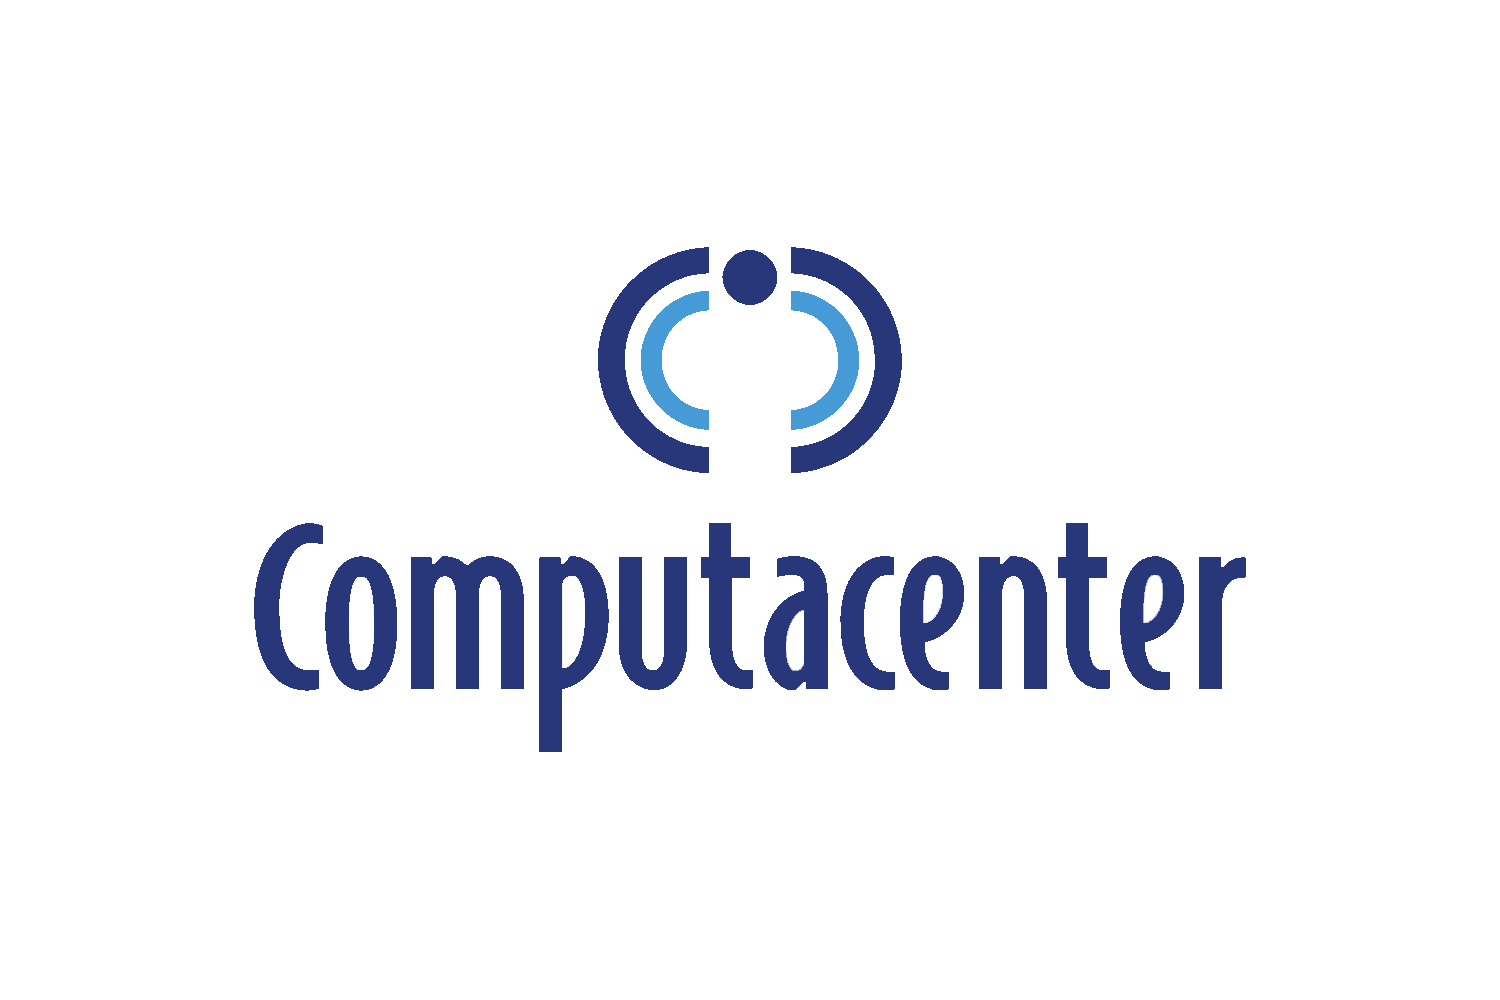 Logo Computacenter